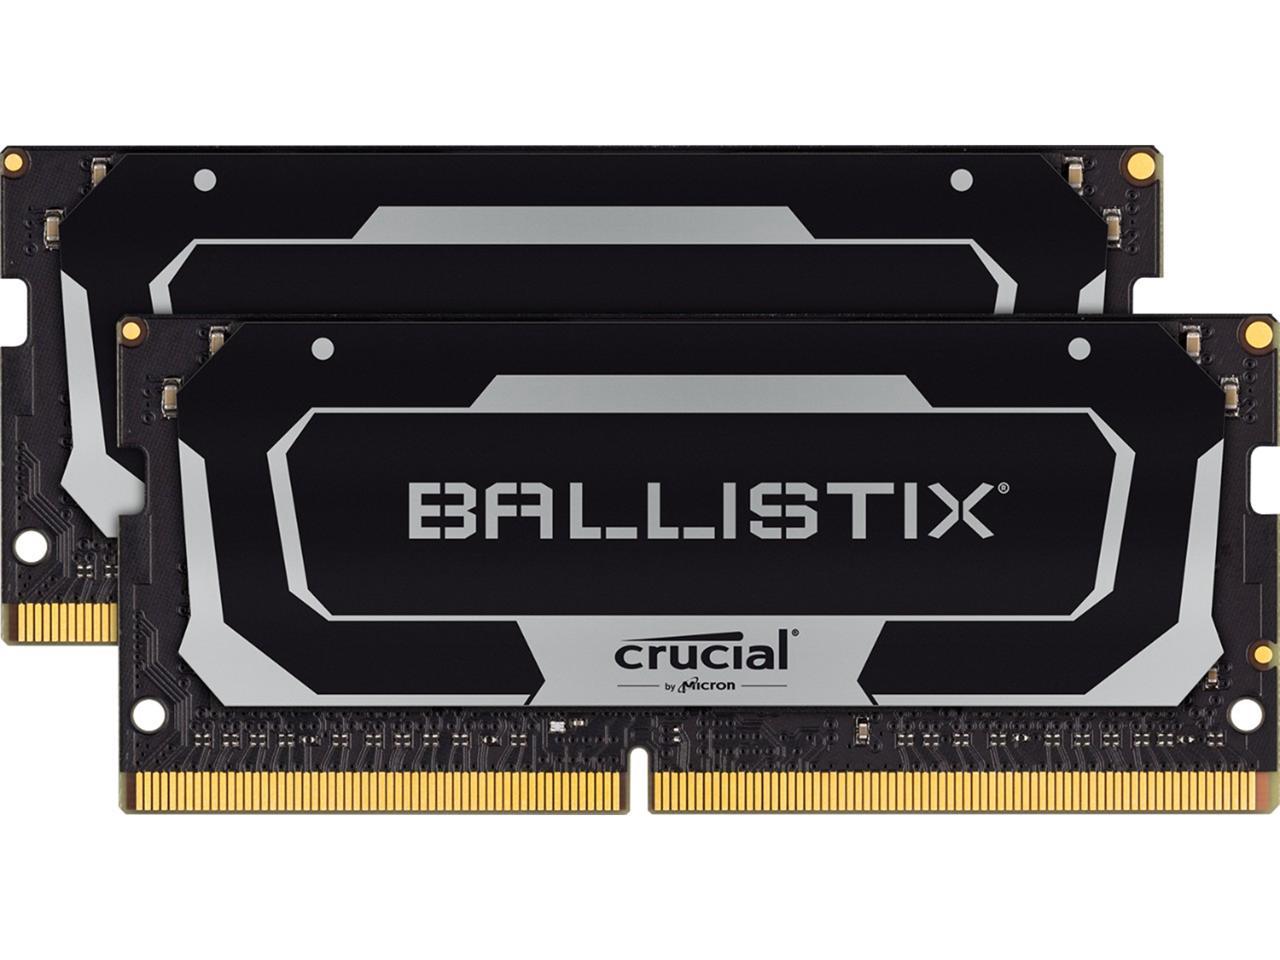 32GB DRAM DDR4 CL16 16GB x2 Laptop Gaming Memory Kit Crucial Ballistix BL2K16G26C16S4B 2666 MHz 